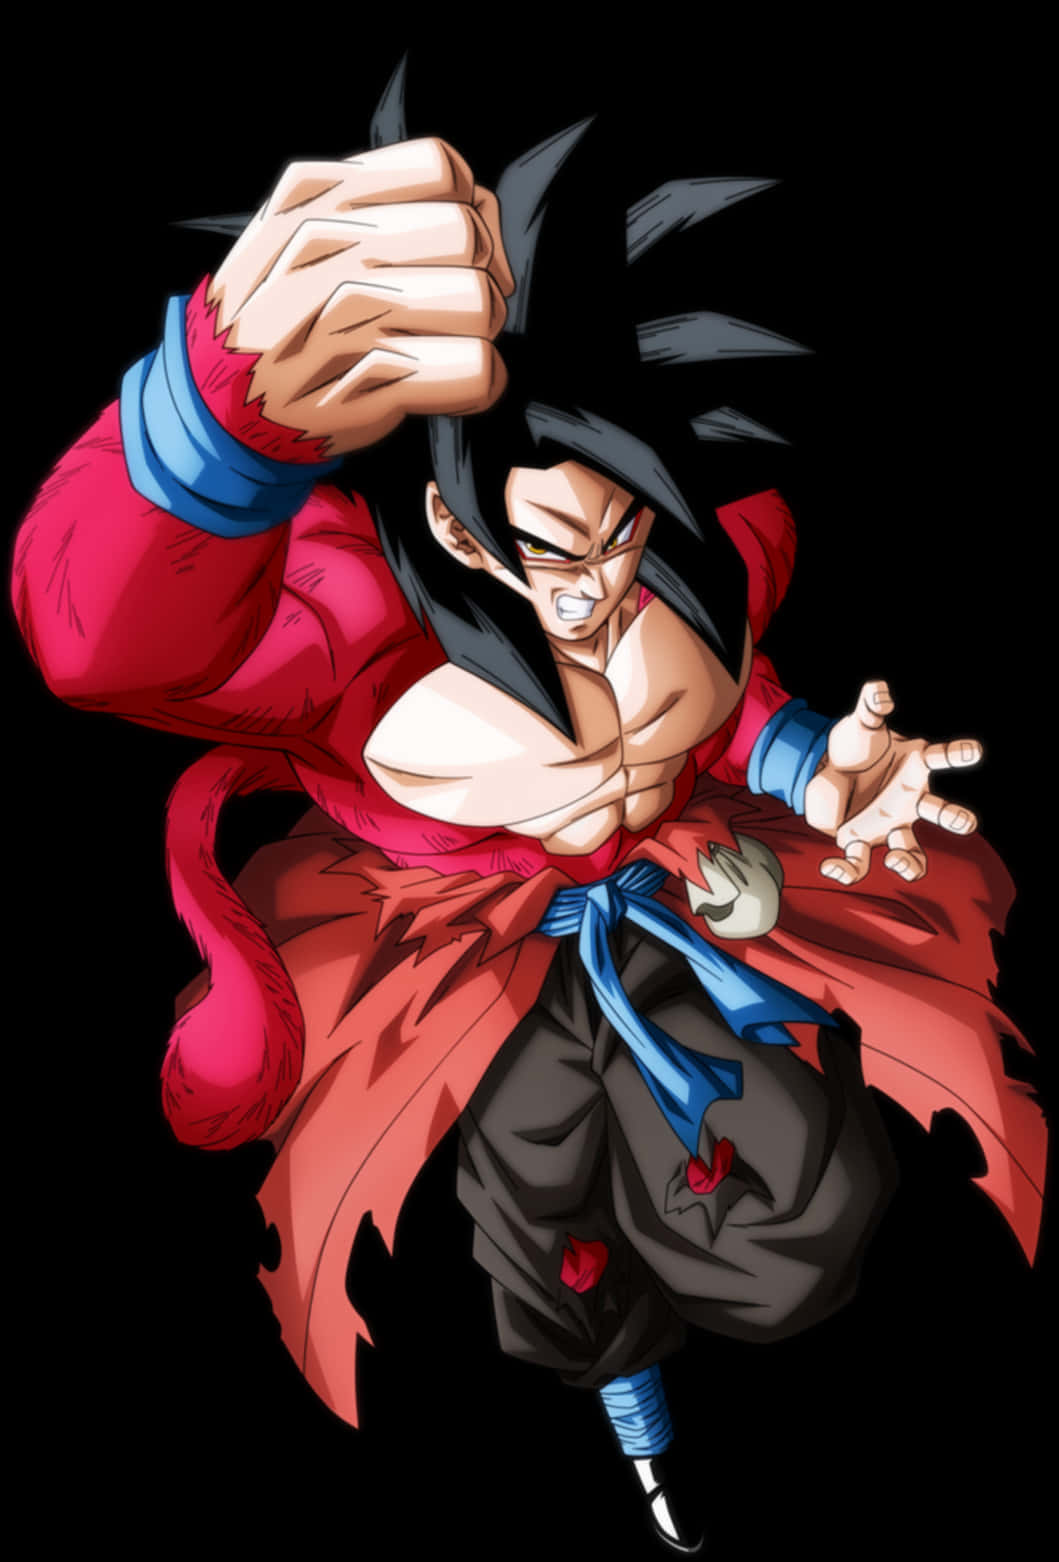 Super Saiyan4 Goku Power Up PNG image